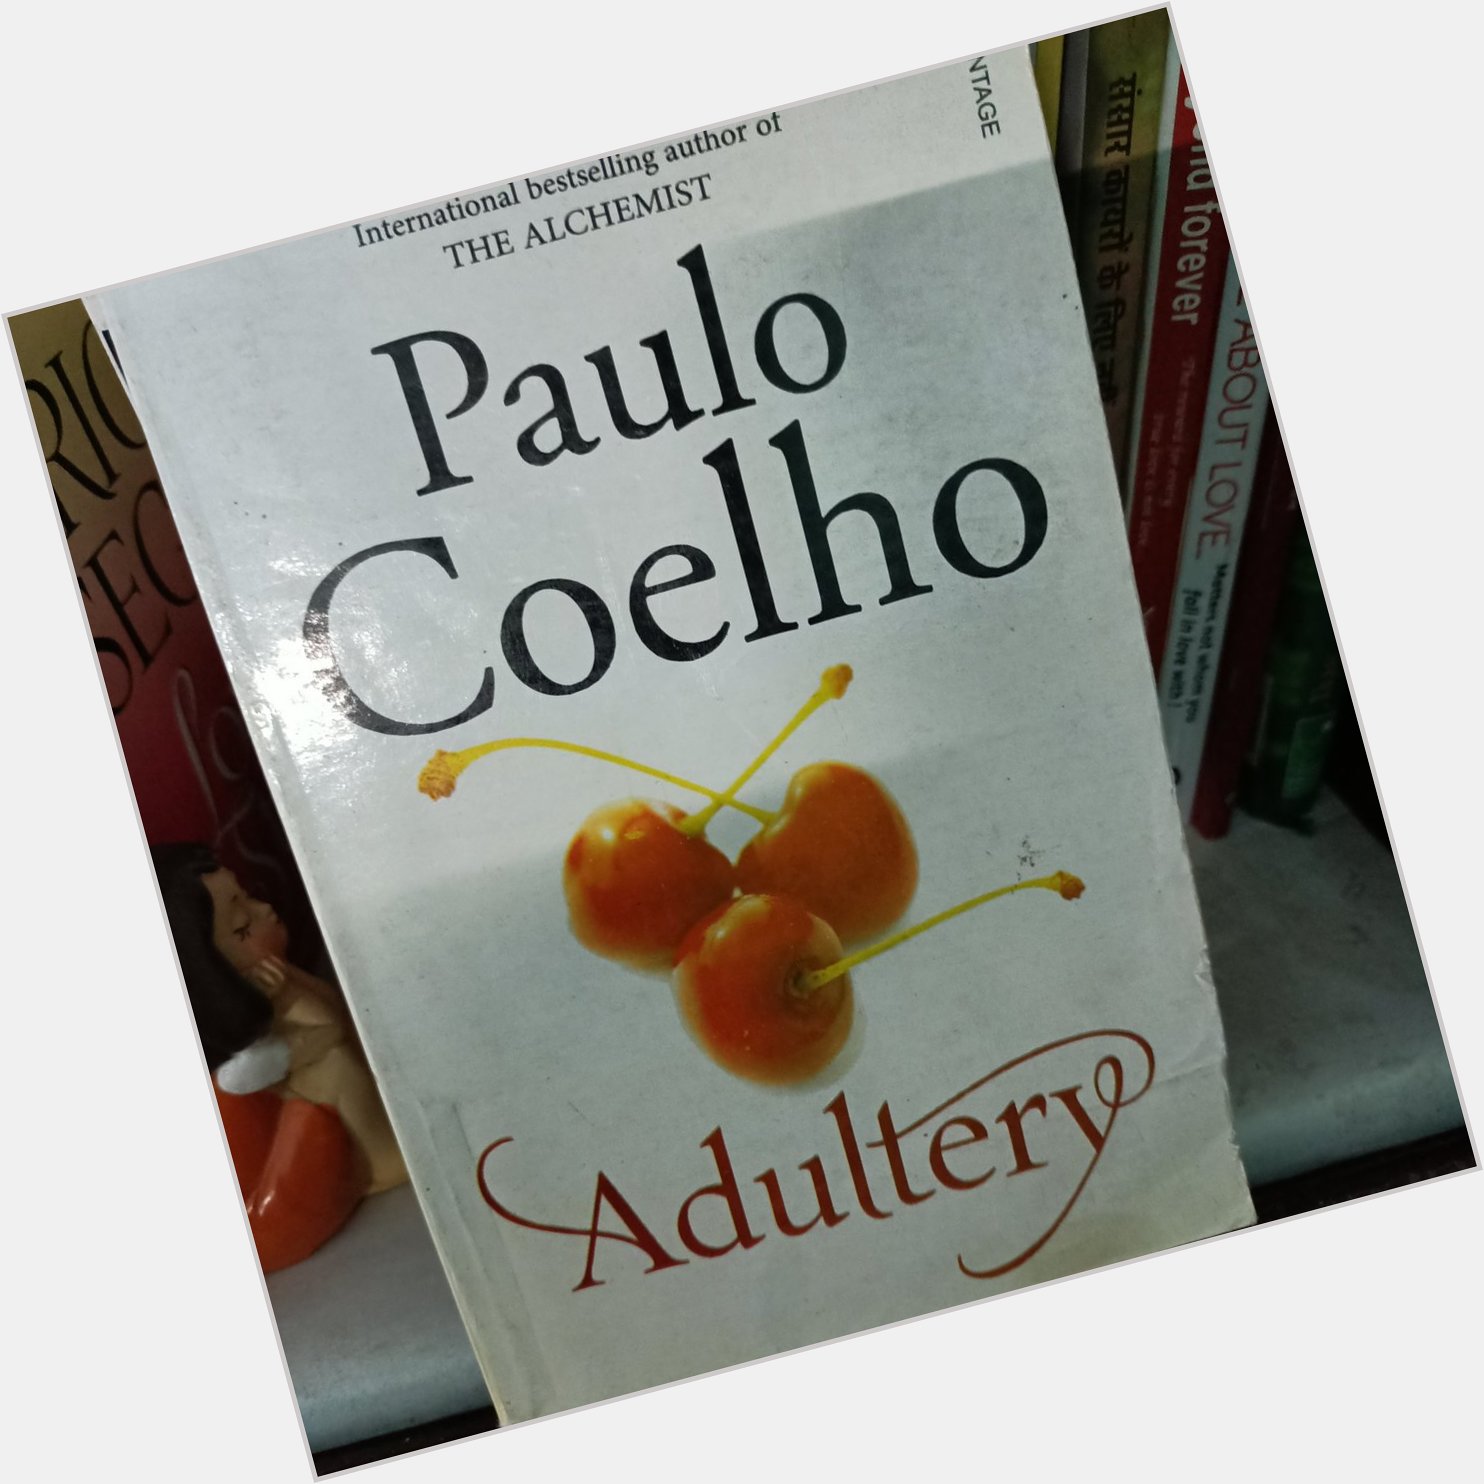 Happy Birthday Paulo Coelho ..
You are amazing . 